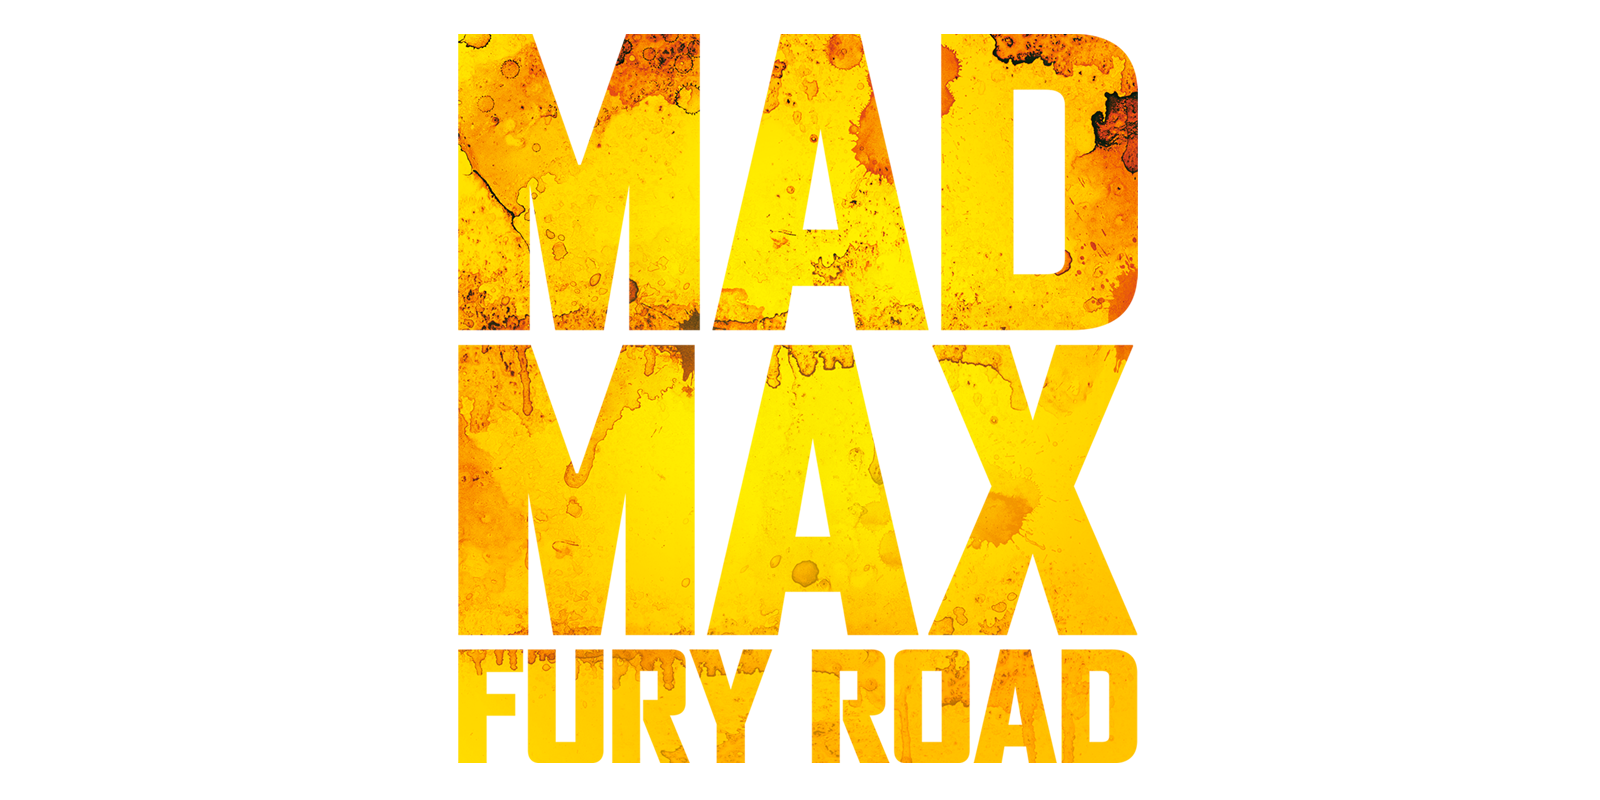 mad max fury road 4k digital download